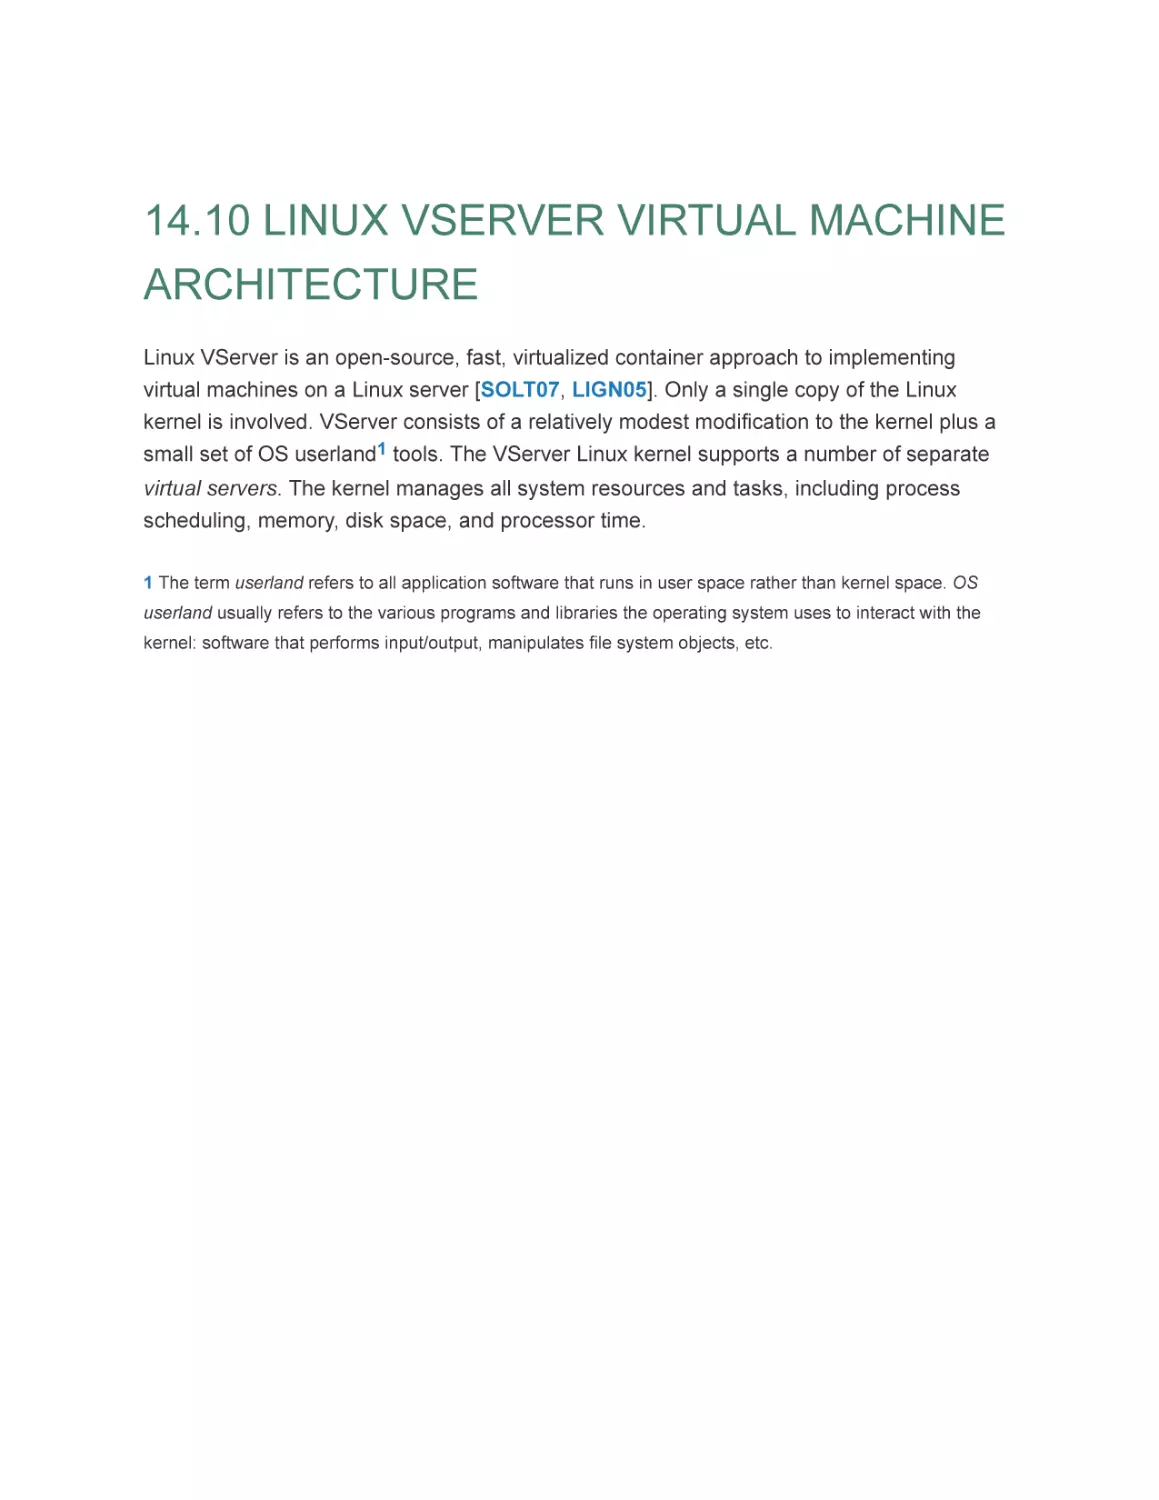 14.10 LINUX VSERVER VIRTUAL MACHINE ARCHITECTURE